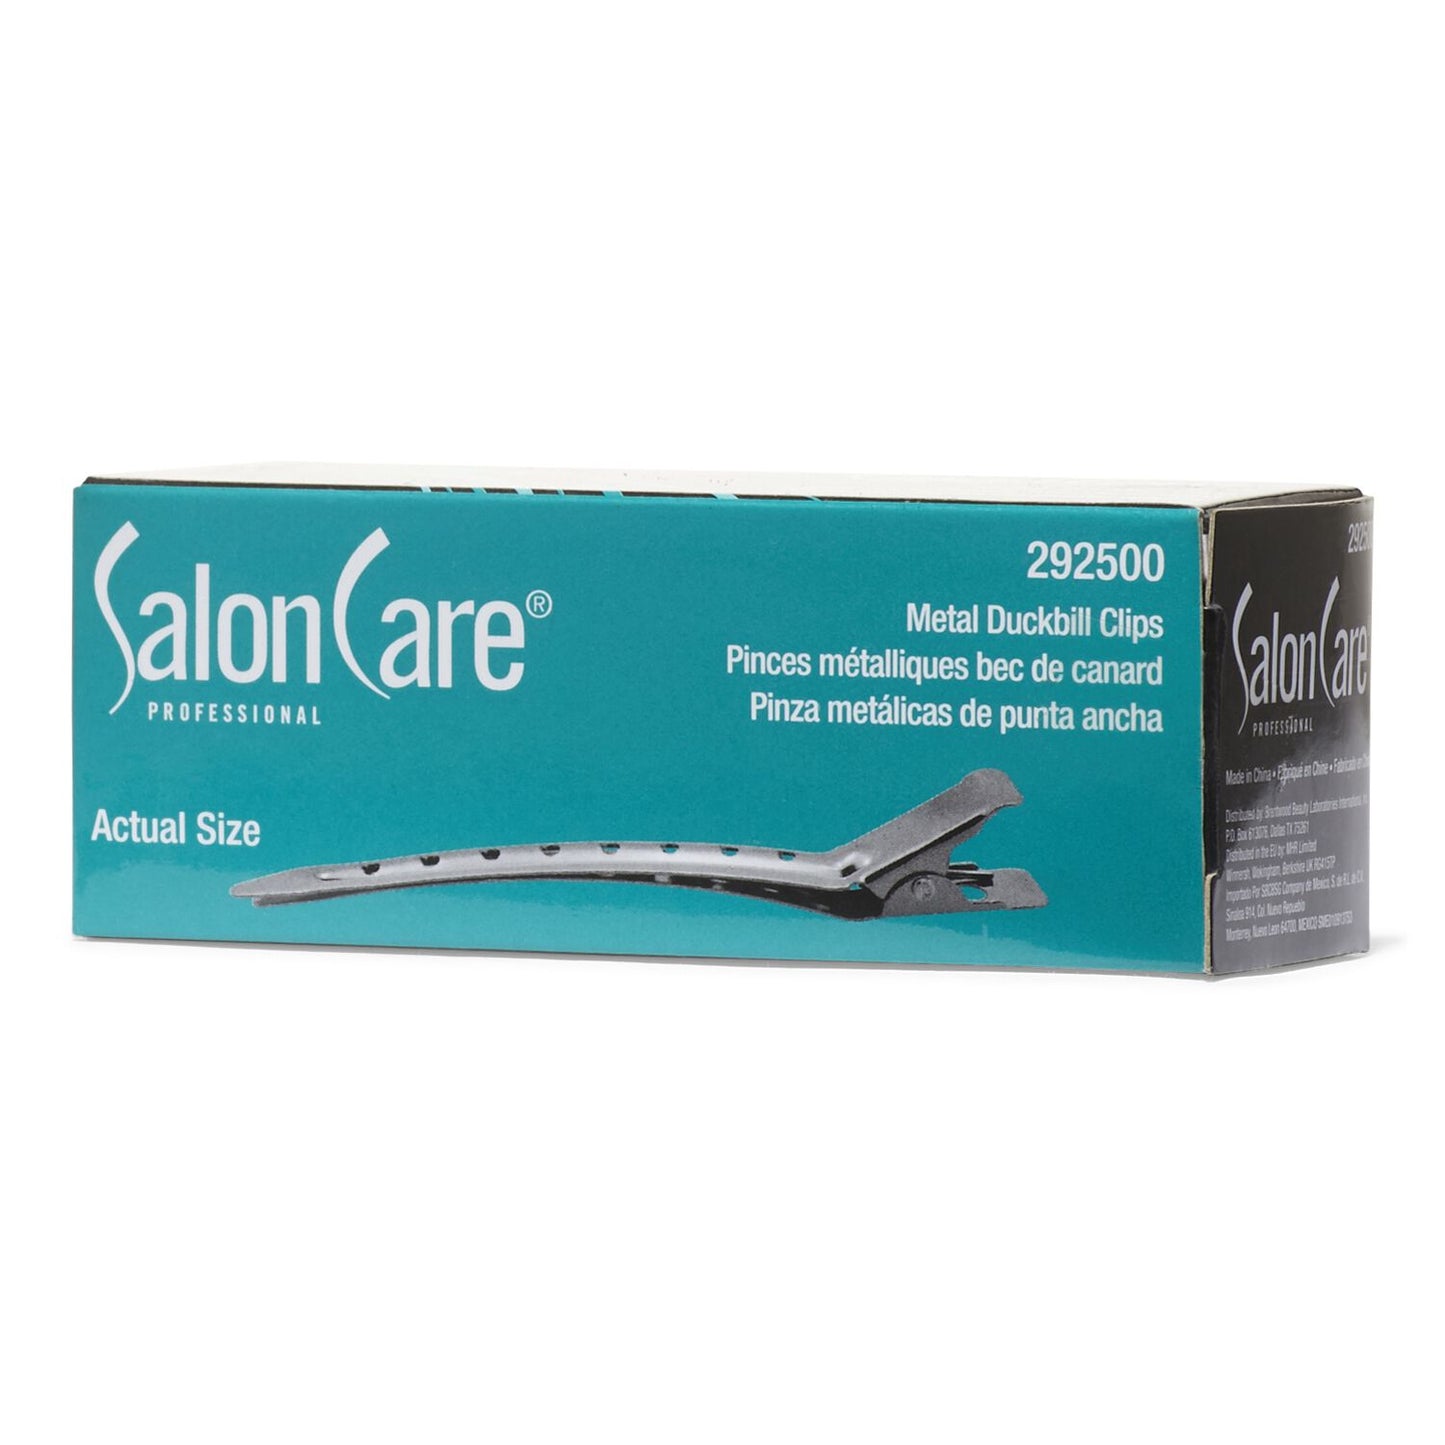 Salon Care Metal Duckbill Clips